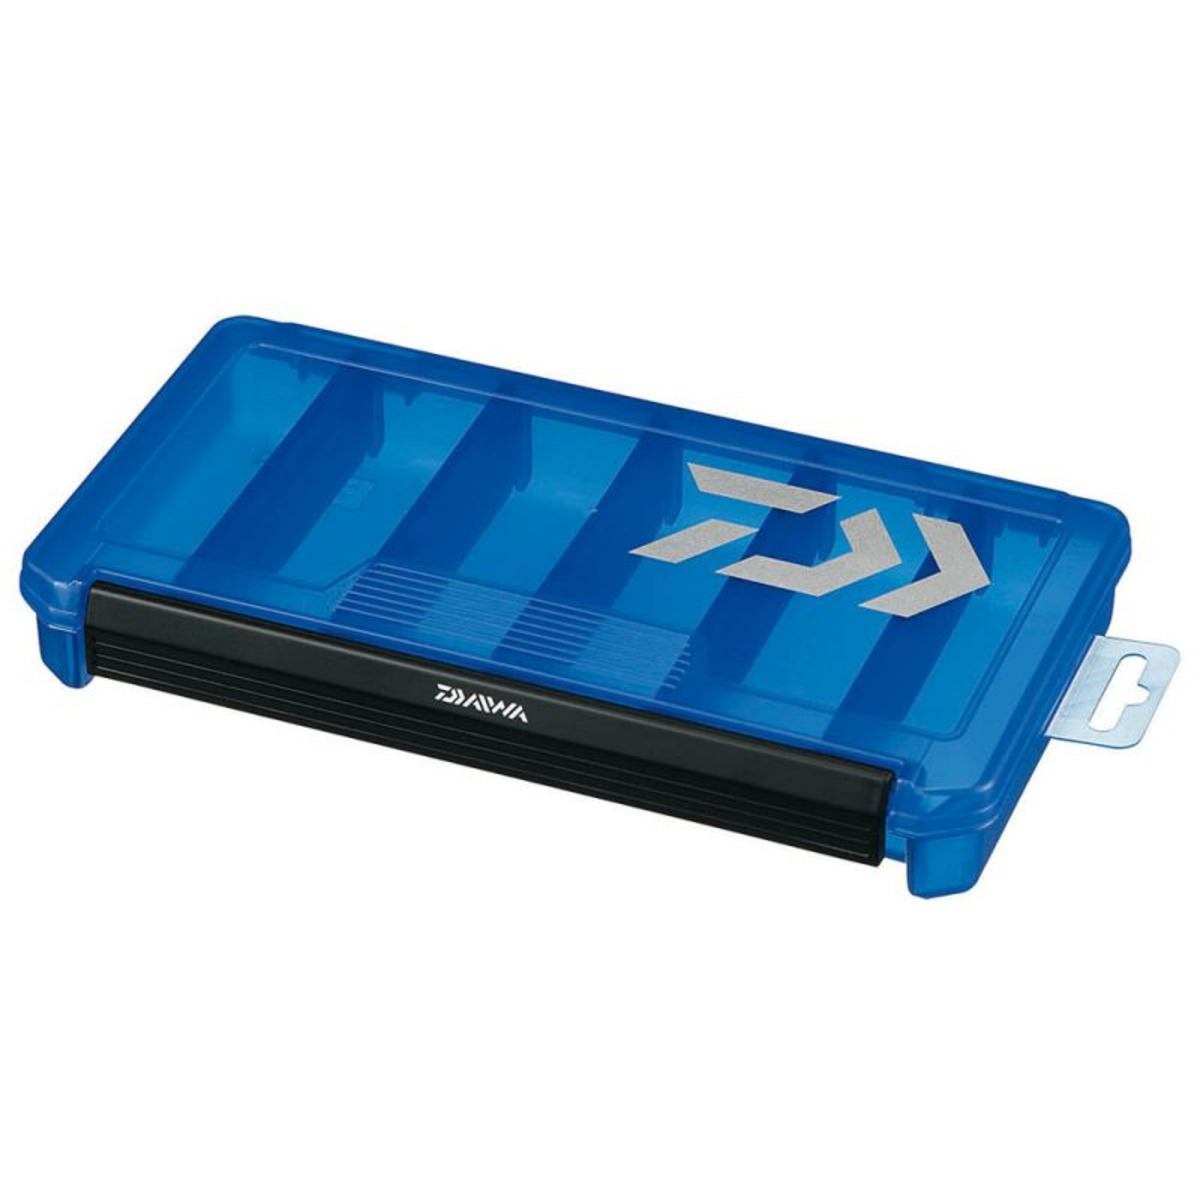 Daiwa Accessory Box -  Blue - 6 Adjustable Compartments       